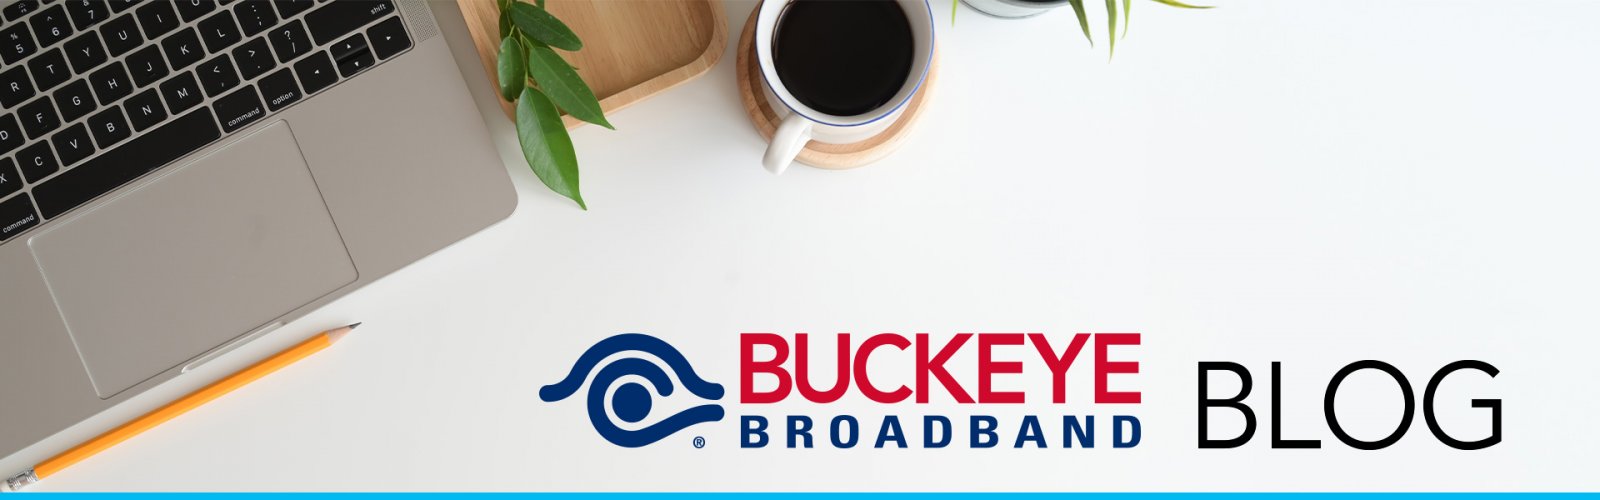 top view of laptop and coffee mug with text that says buckeye broadband blog